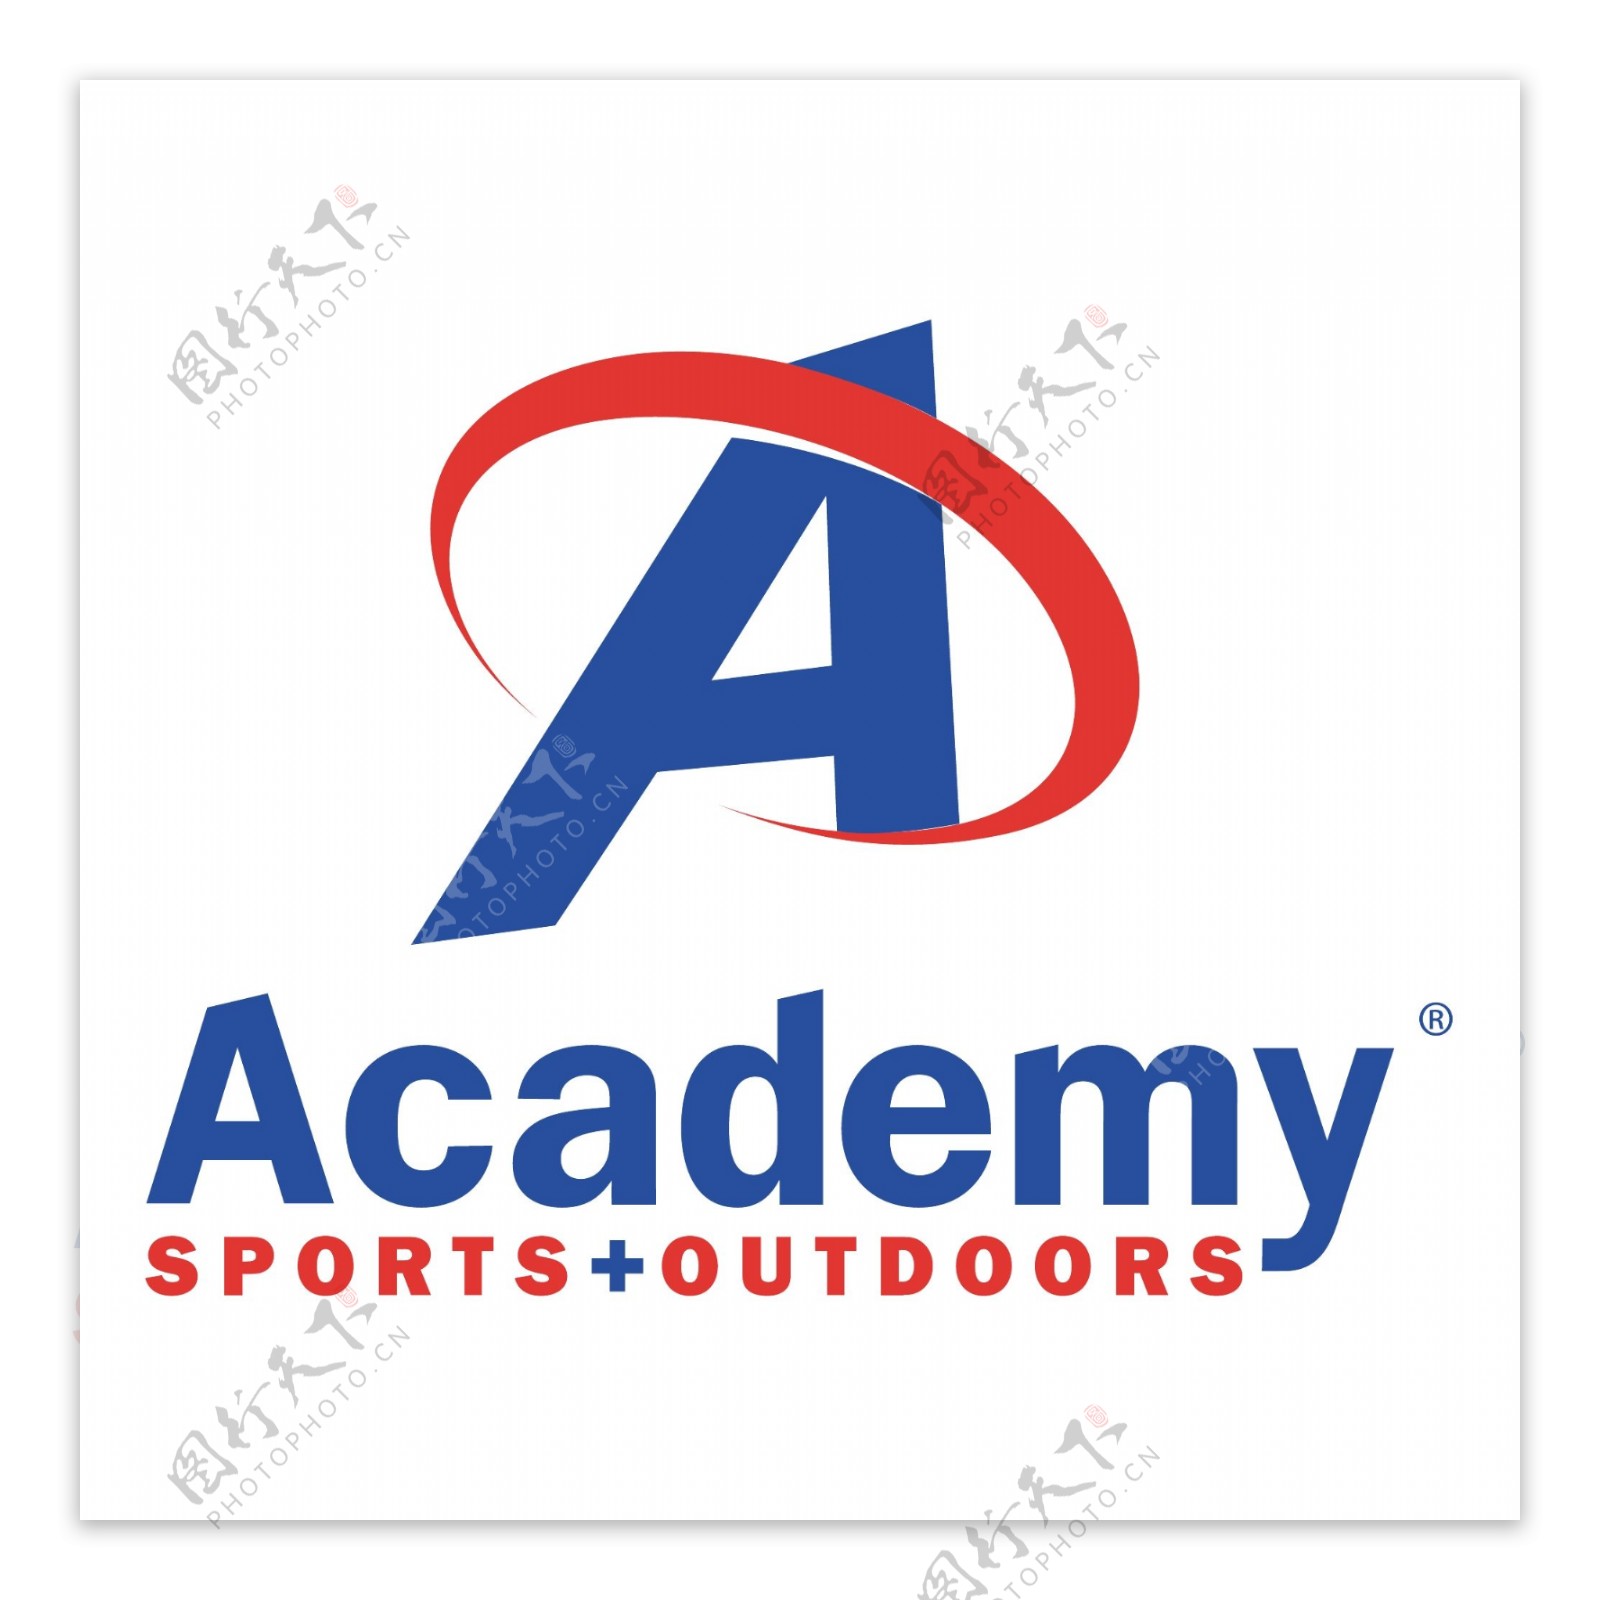 AcademySportsOutdoorslogo设计欣赏AcademySportsOutdoors体育赛事标志下载标志设计欣赏